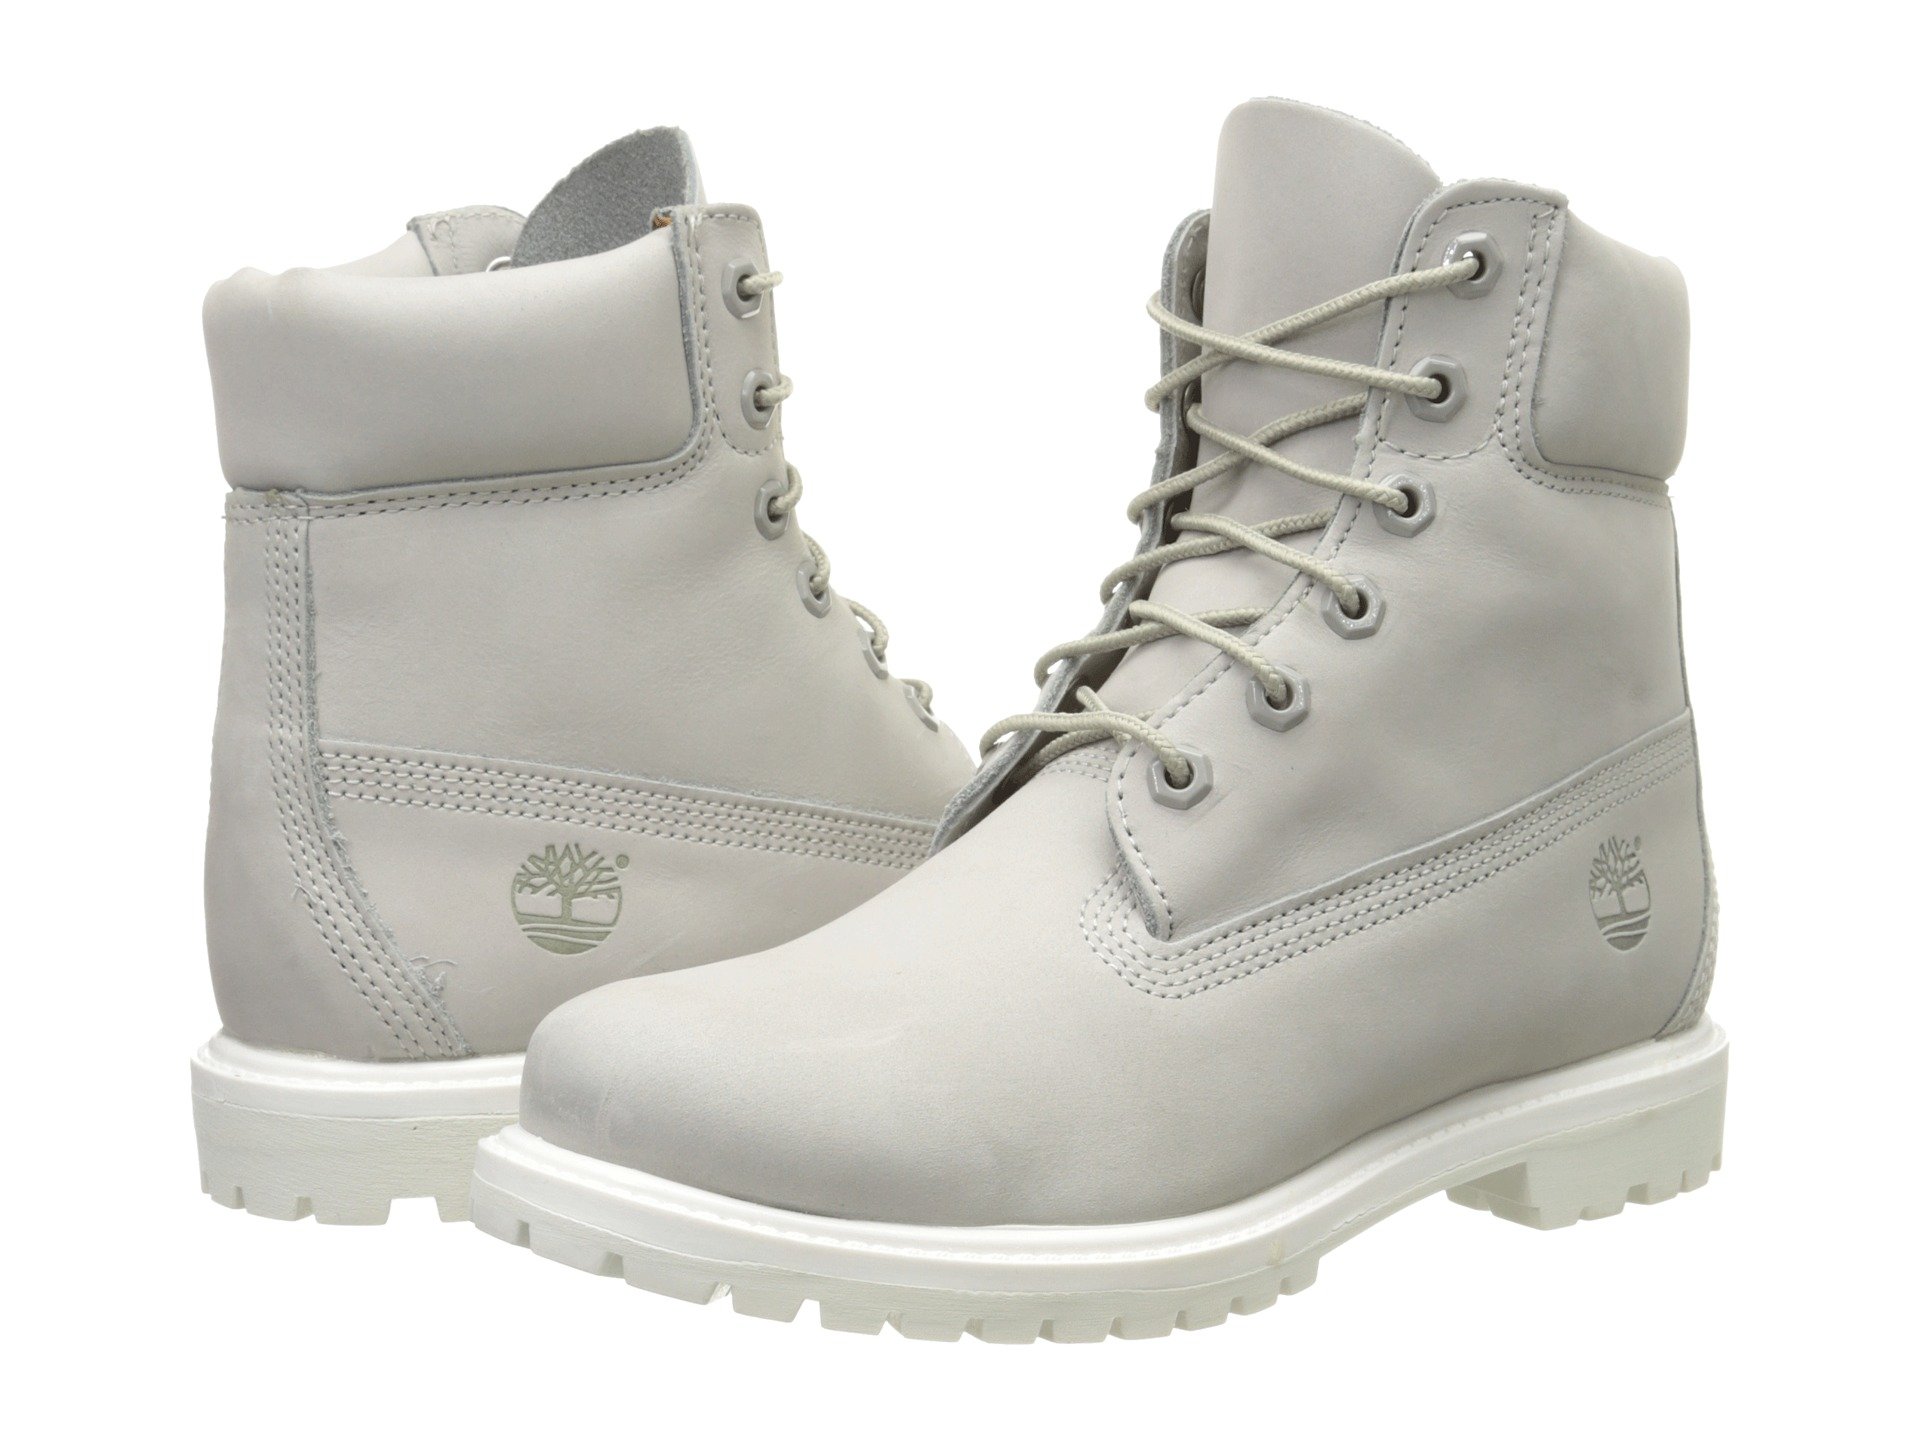 Timberland Leather 6" Premium Boot in Light Grey Nubuck (Gray) - Lyst